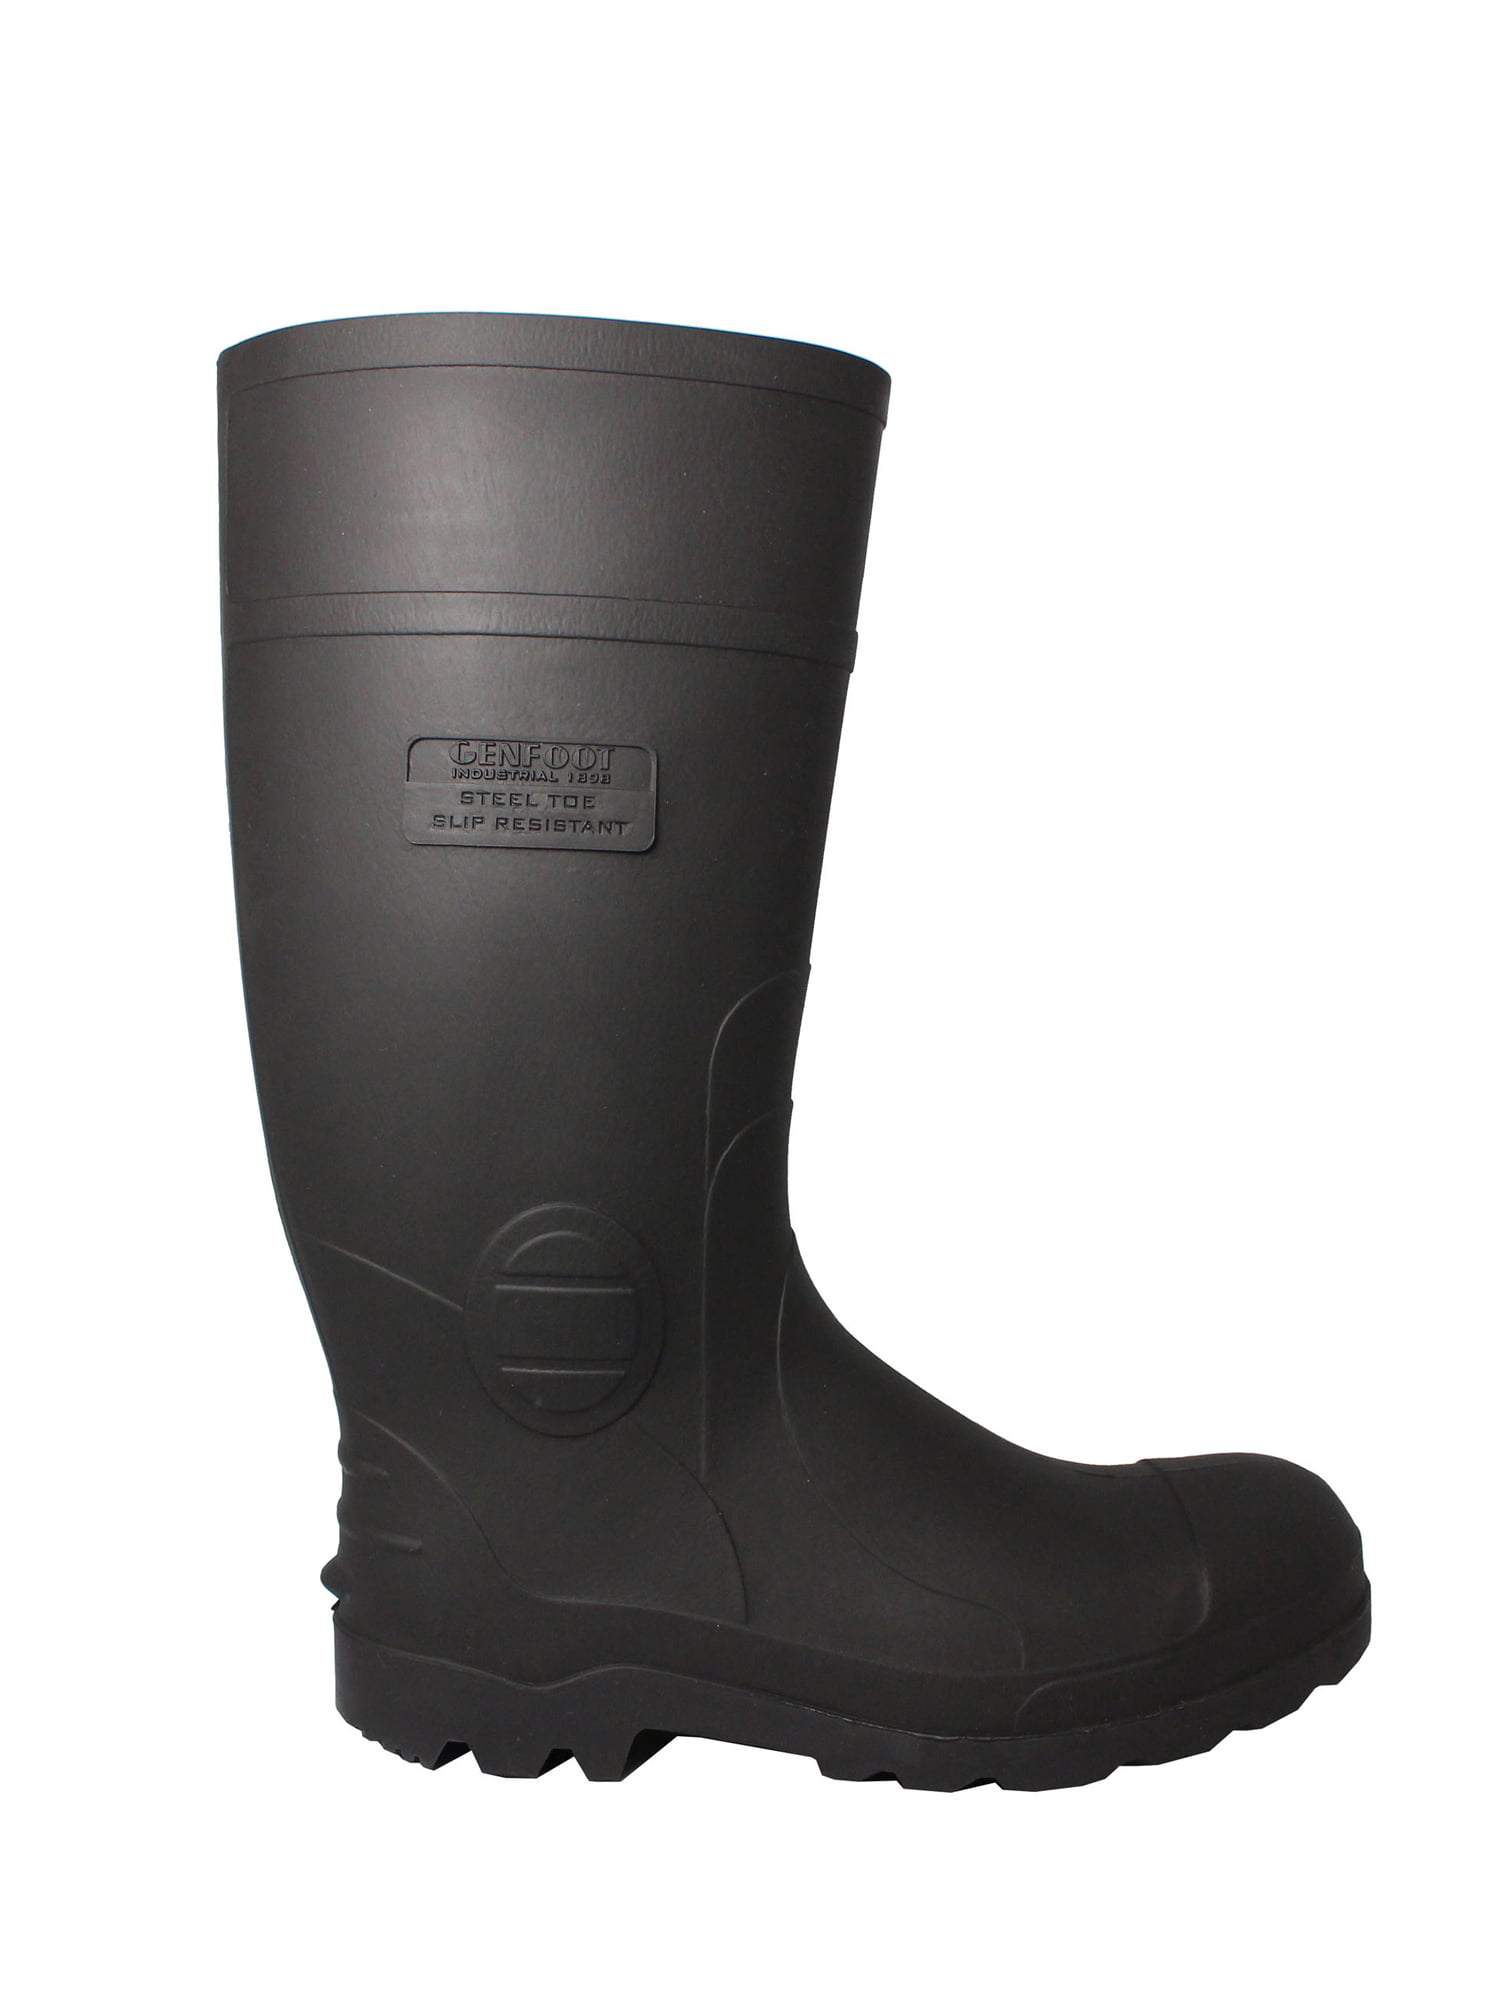 Steel Toe Safety Boot - Walmart.com 